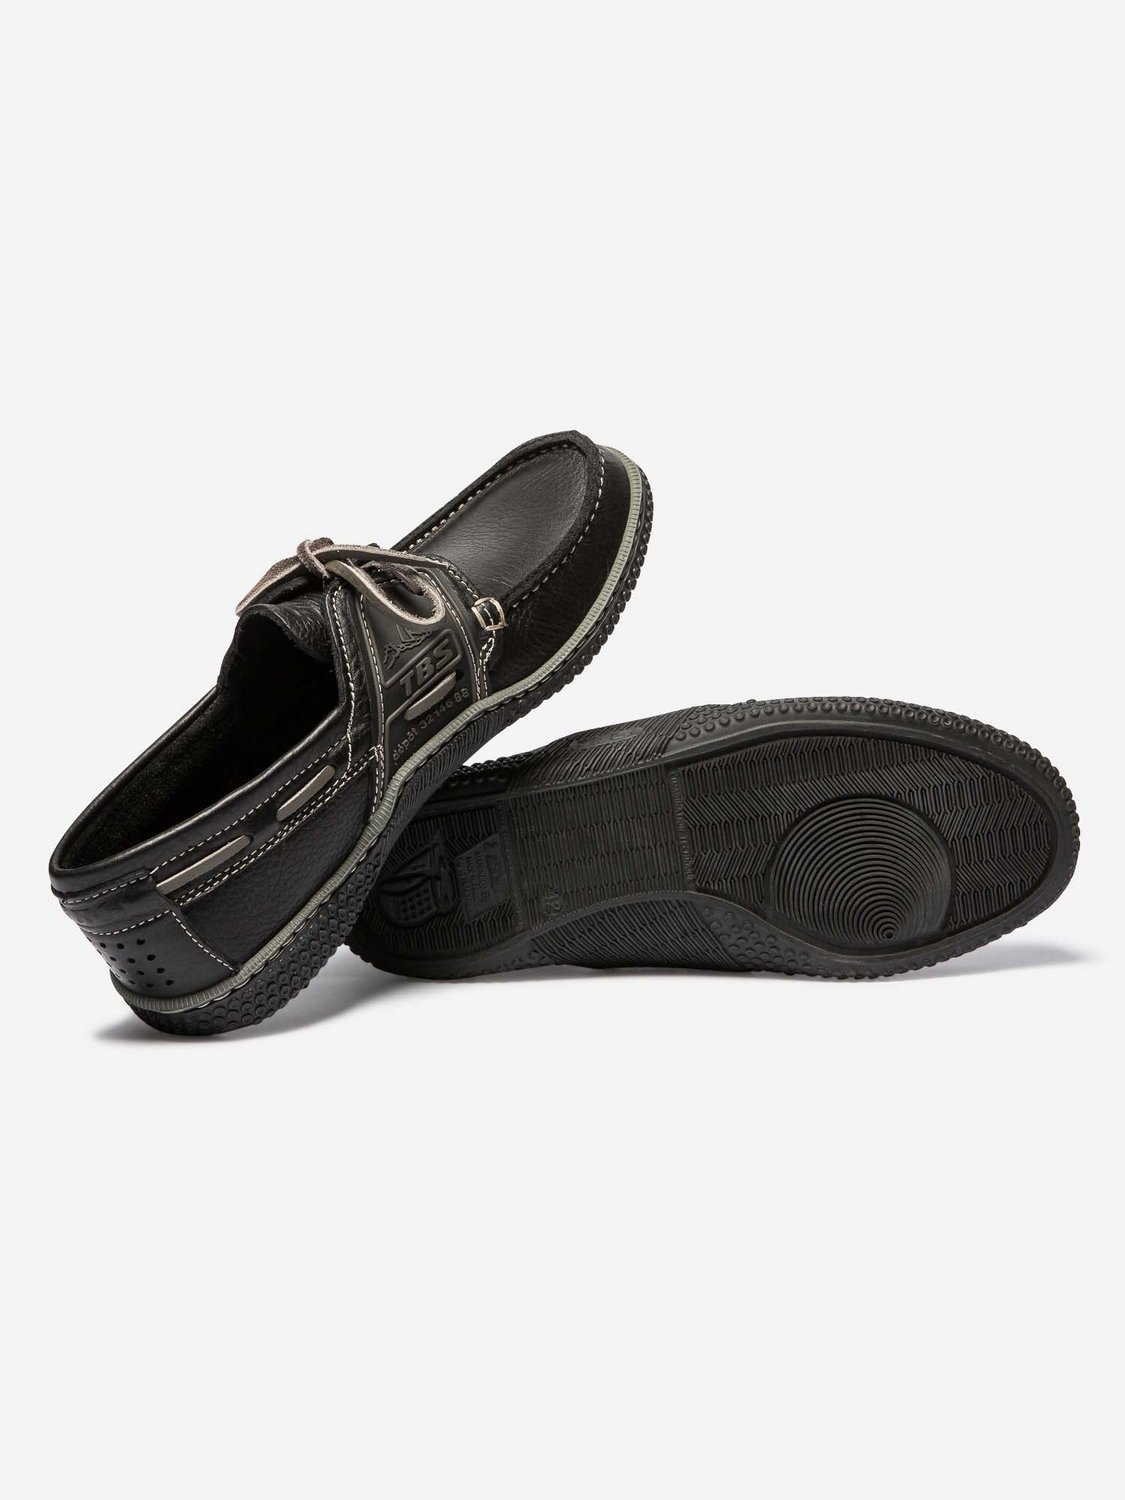 Chaussures Bateau Homme Cuir Noir